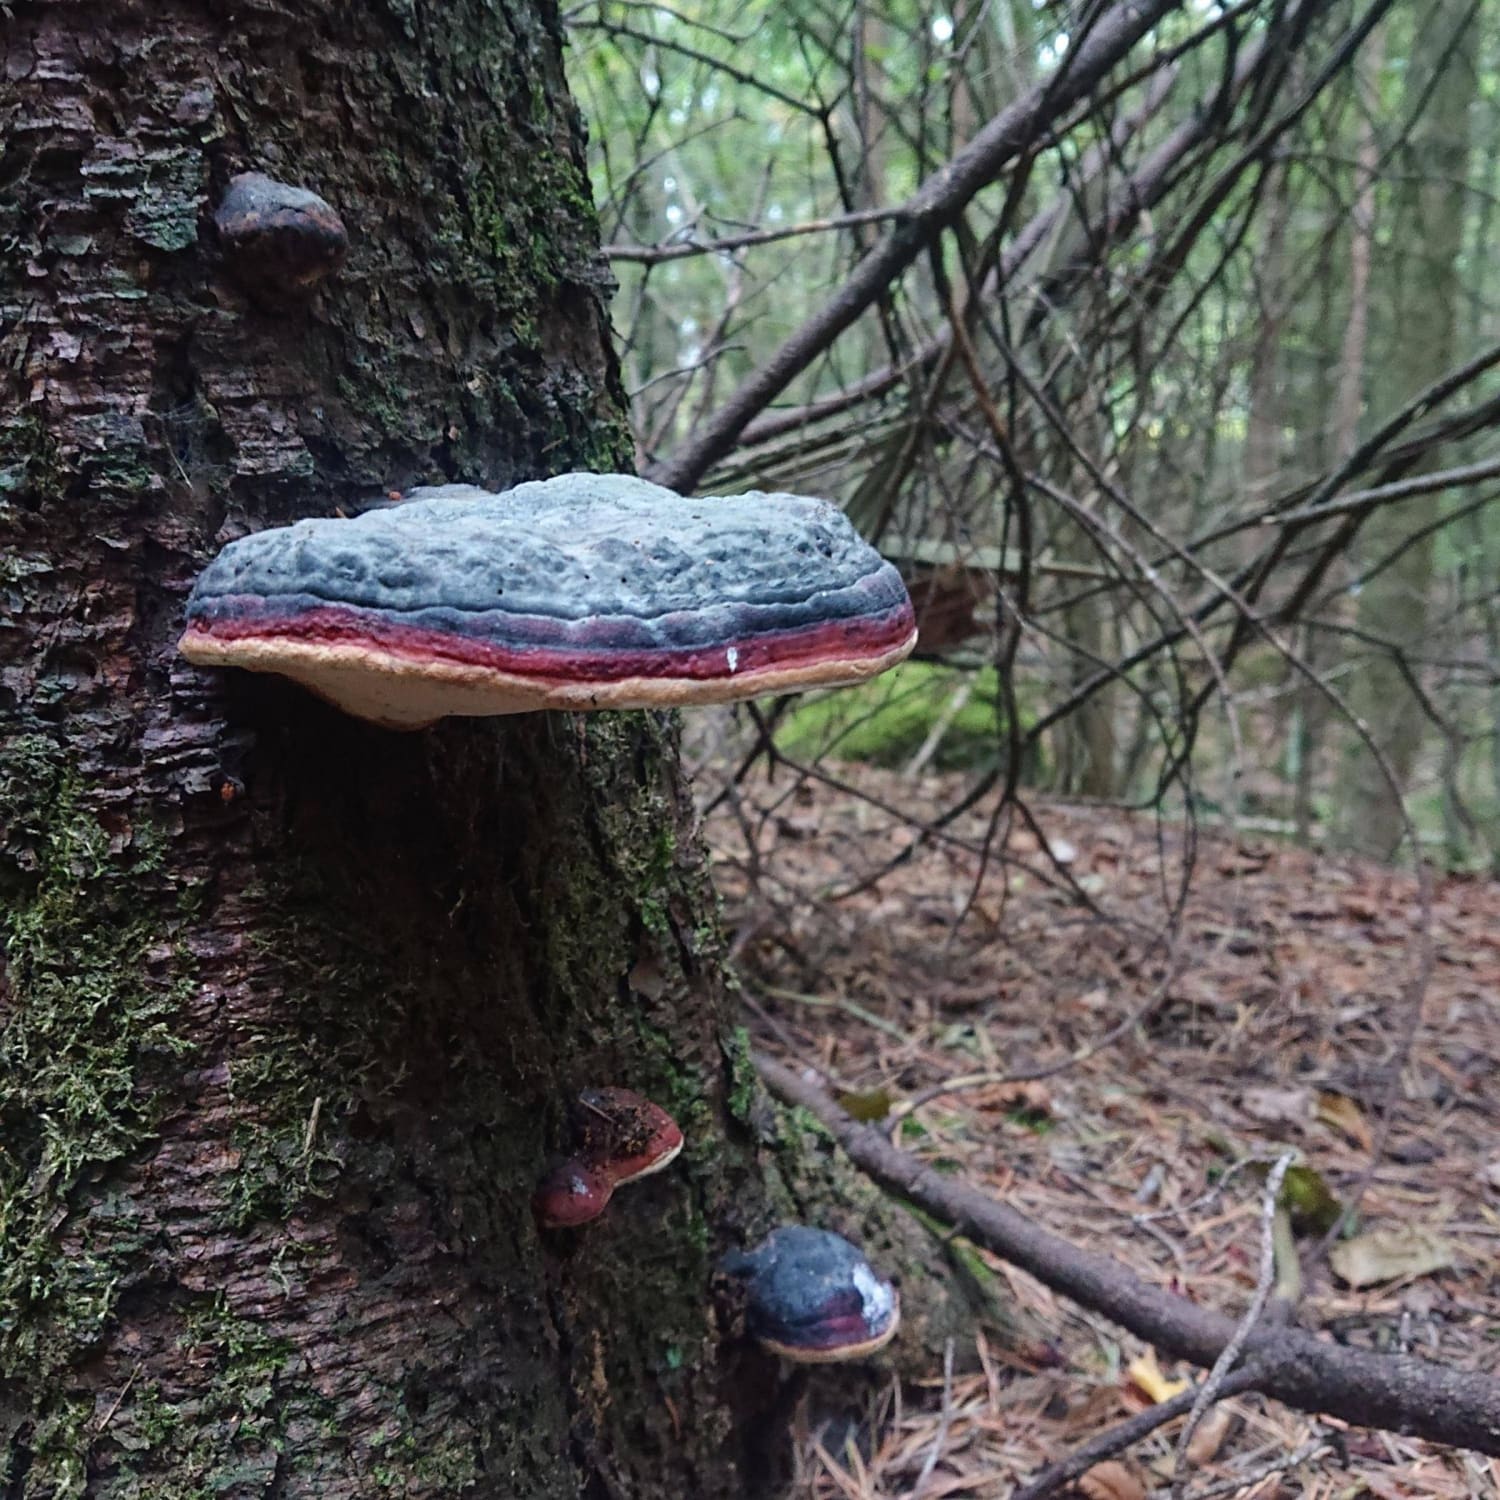 This mushroom has a great paint job